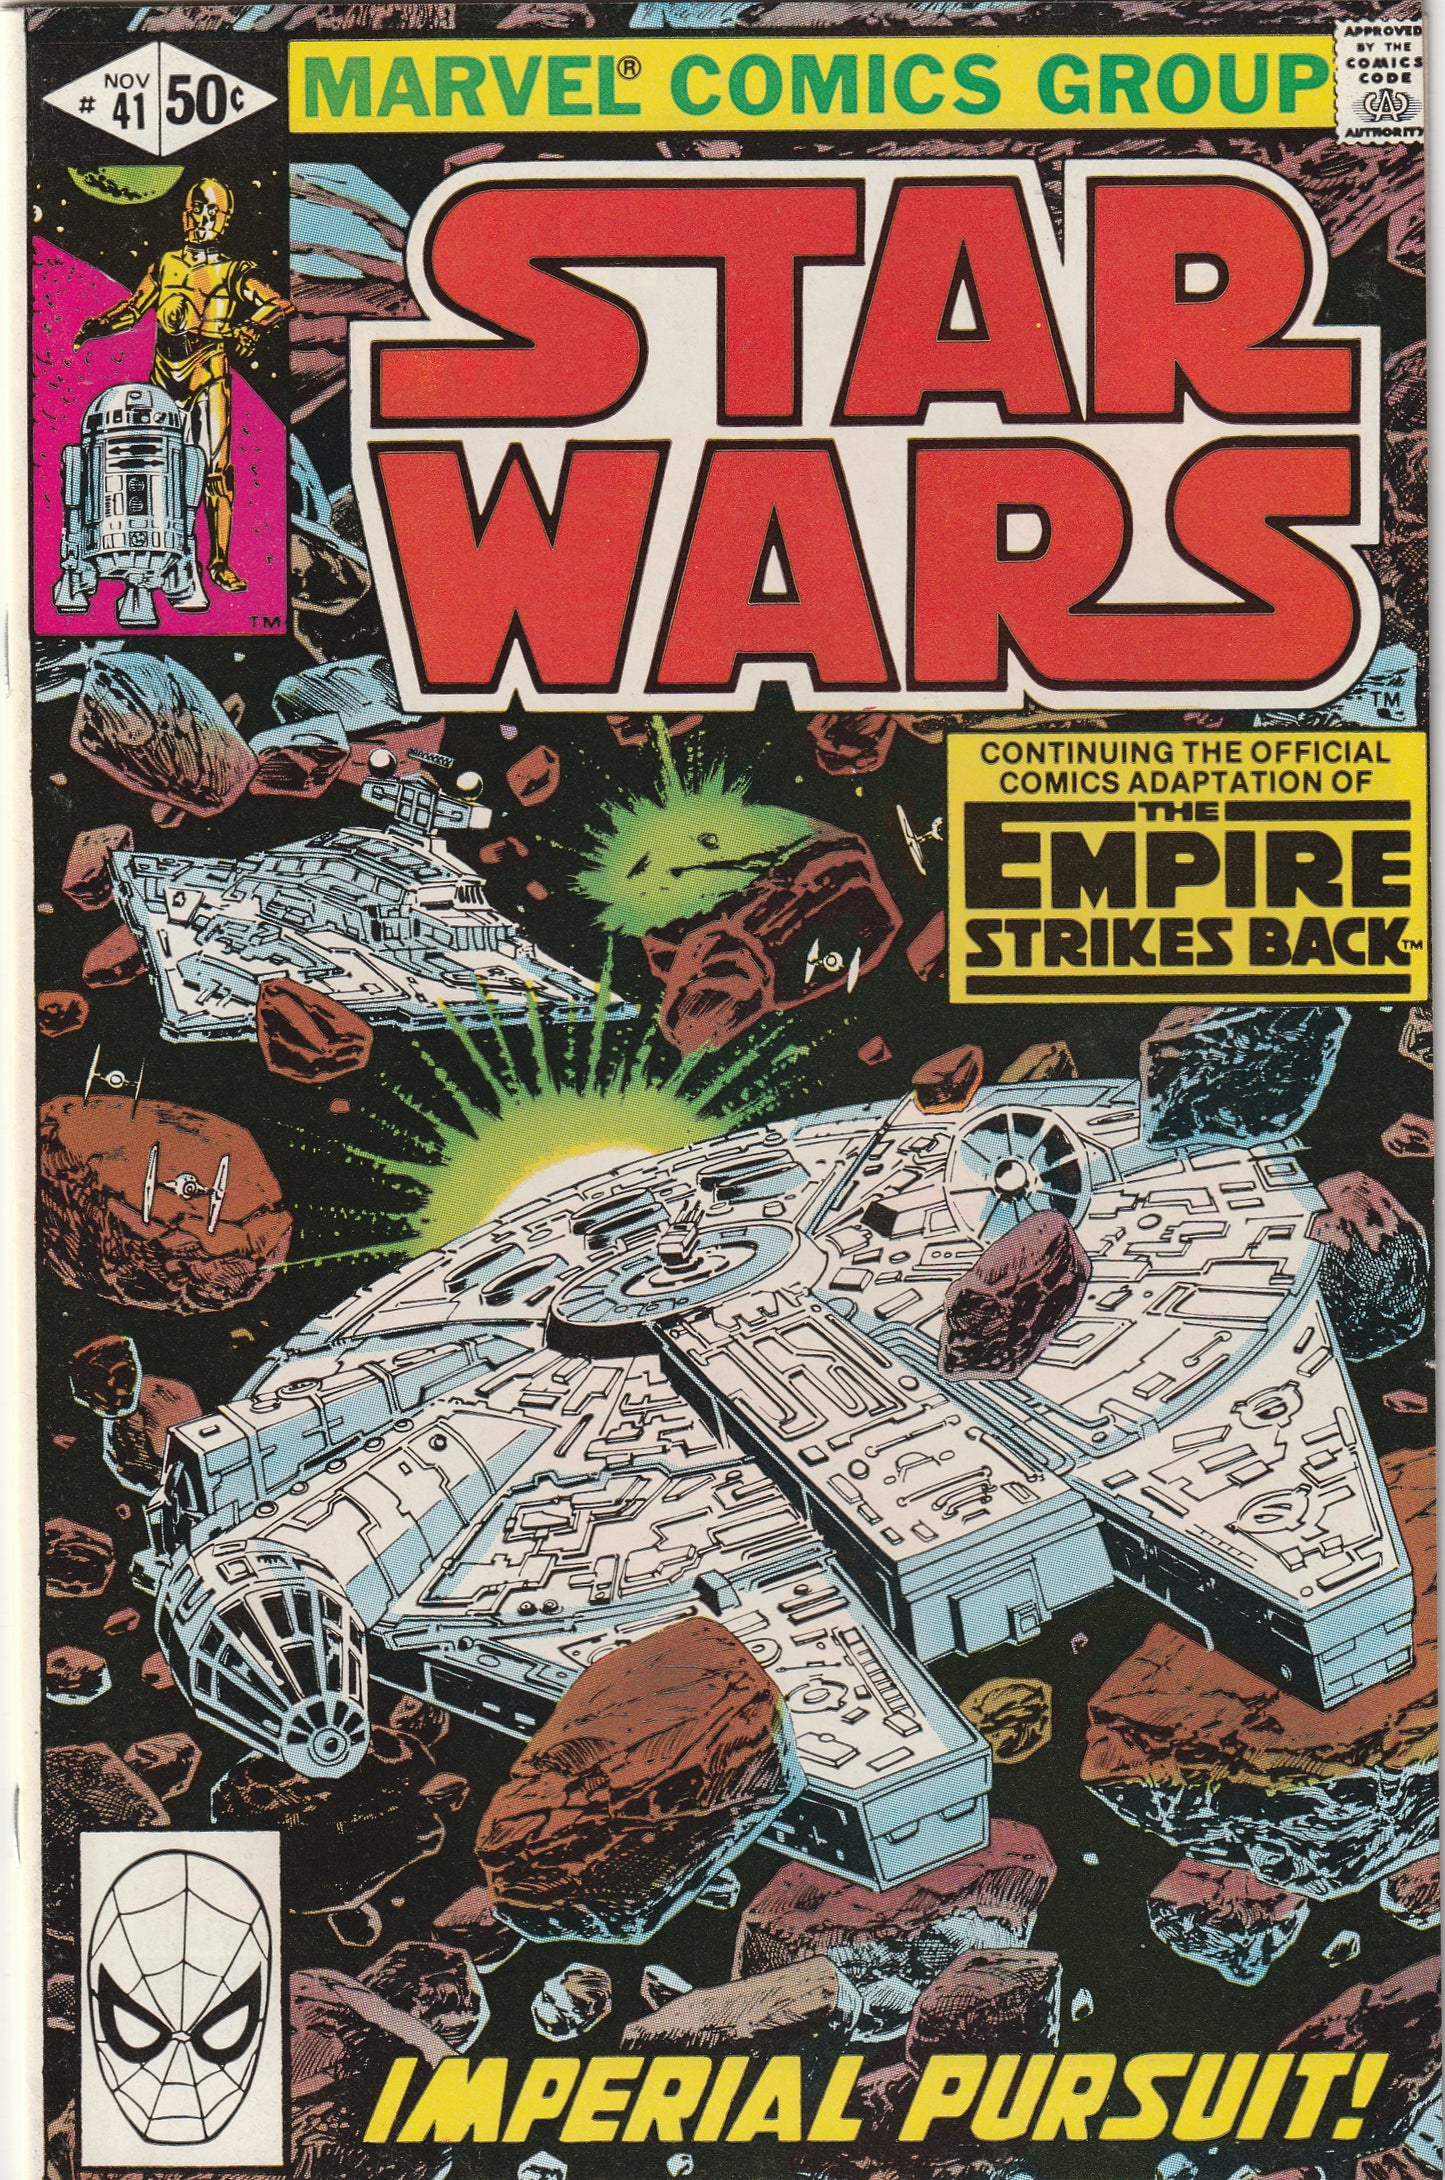 Star Wars #41 (1980) - Empire Strikes Back - Cameo Appearance of Yoda